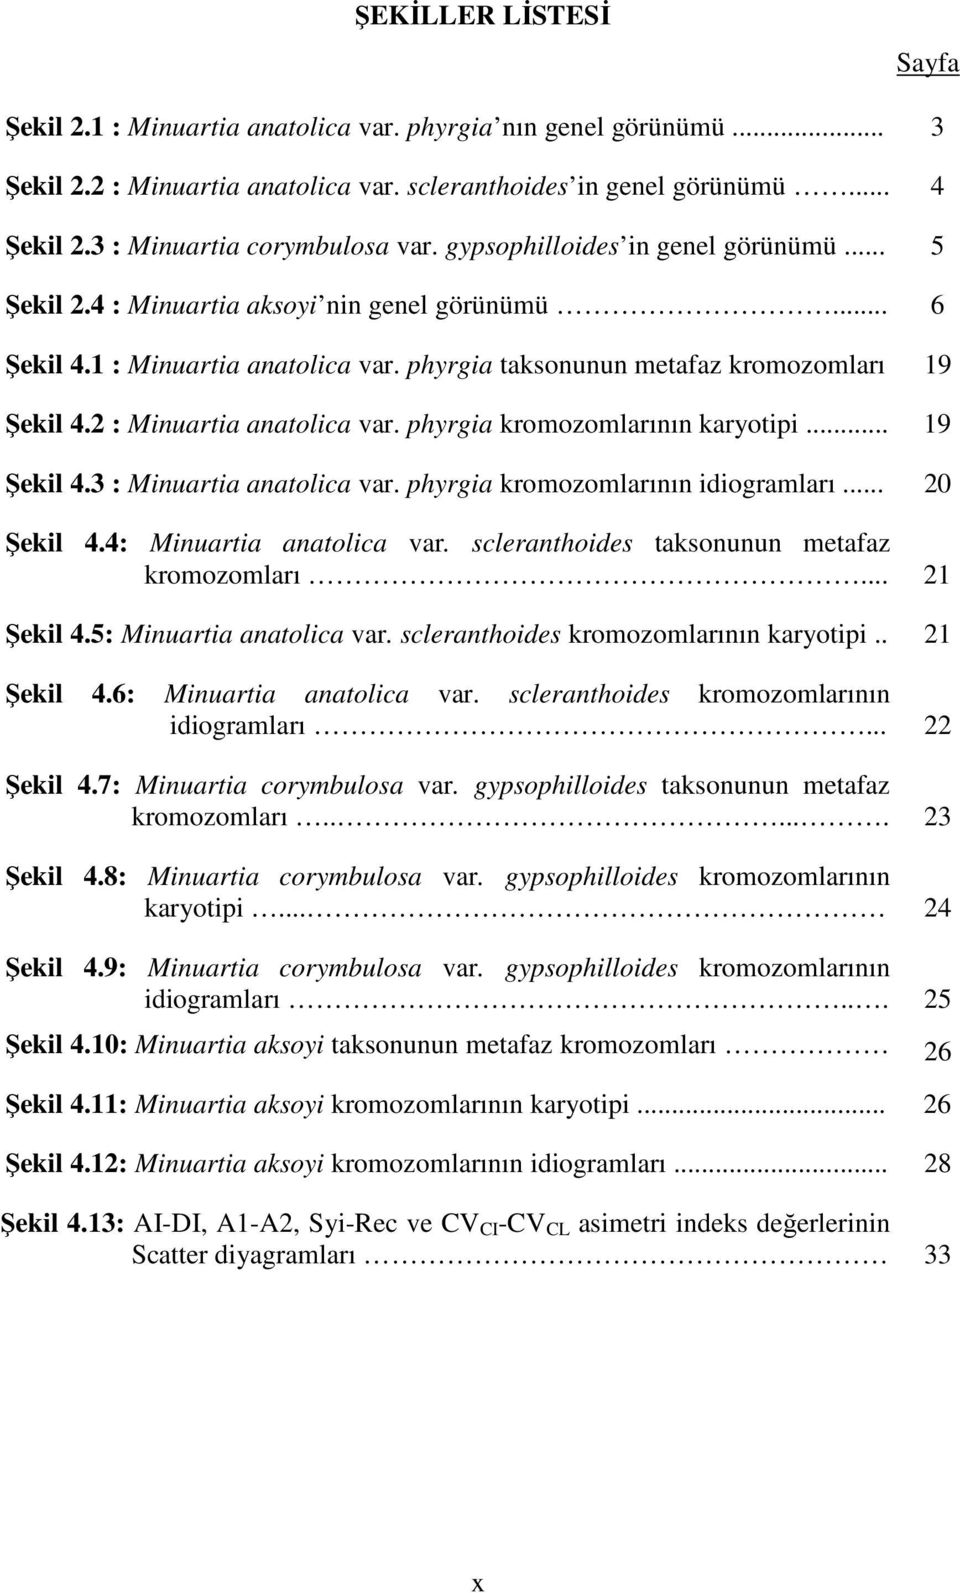 phyrgia taksonunun metafaz kromozomları 19 Şekil 4.2 : Minuartia anatolica var. phyrgia kromozomlarının karyotipi... 19 Şekil 4.3 : Minuartia anatolica var. phyrgia kromozomlarının idiogramları.